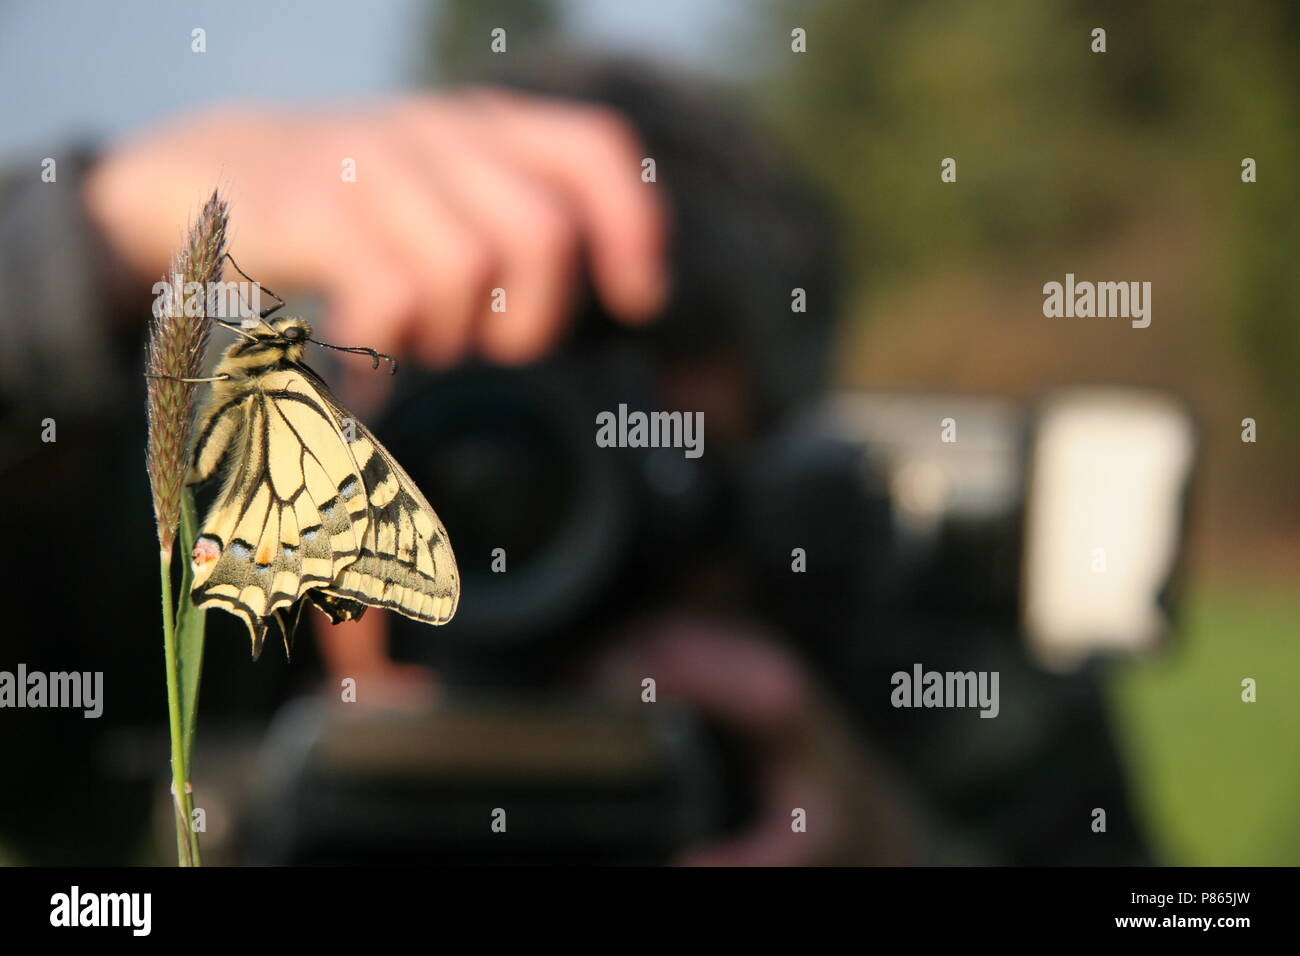 Koninginnepage met fotograaf, Swallowtail with photographer Stock Photo